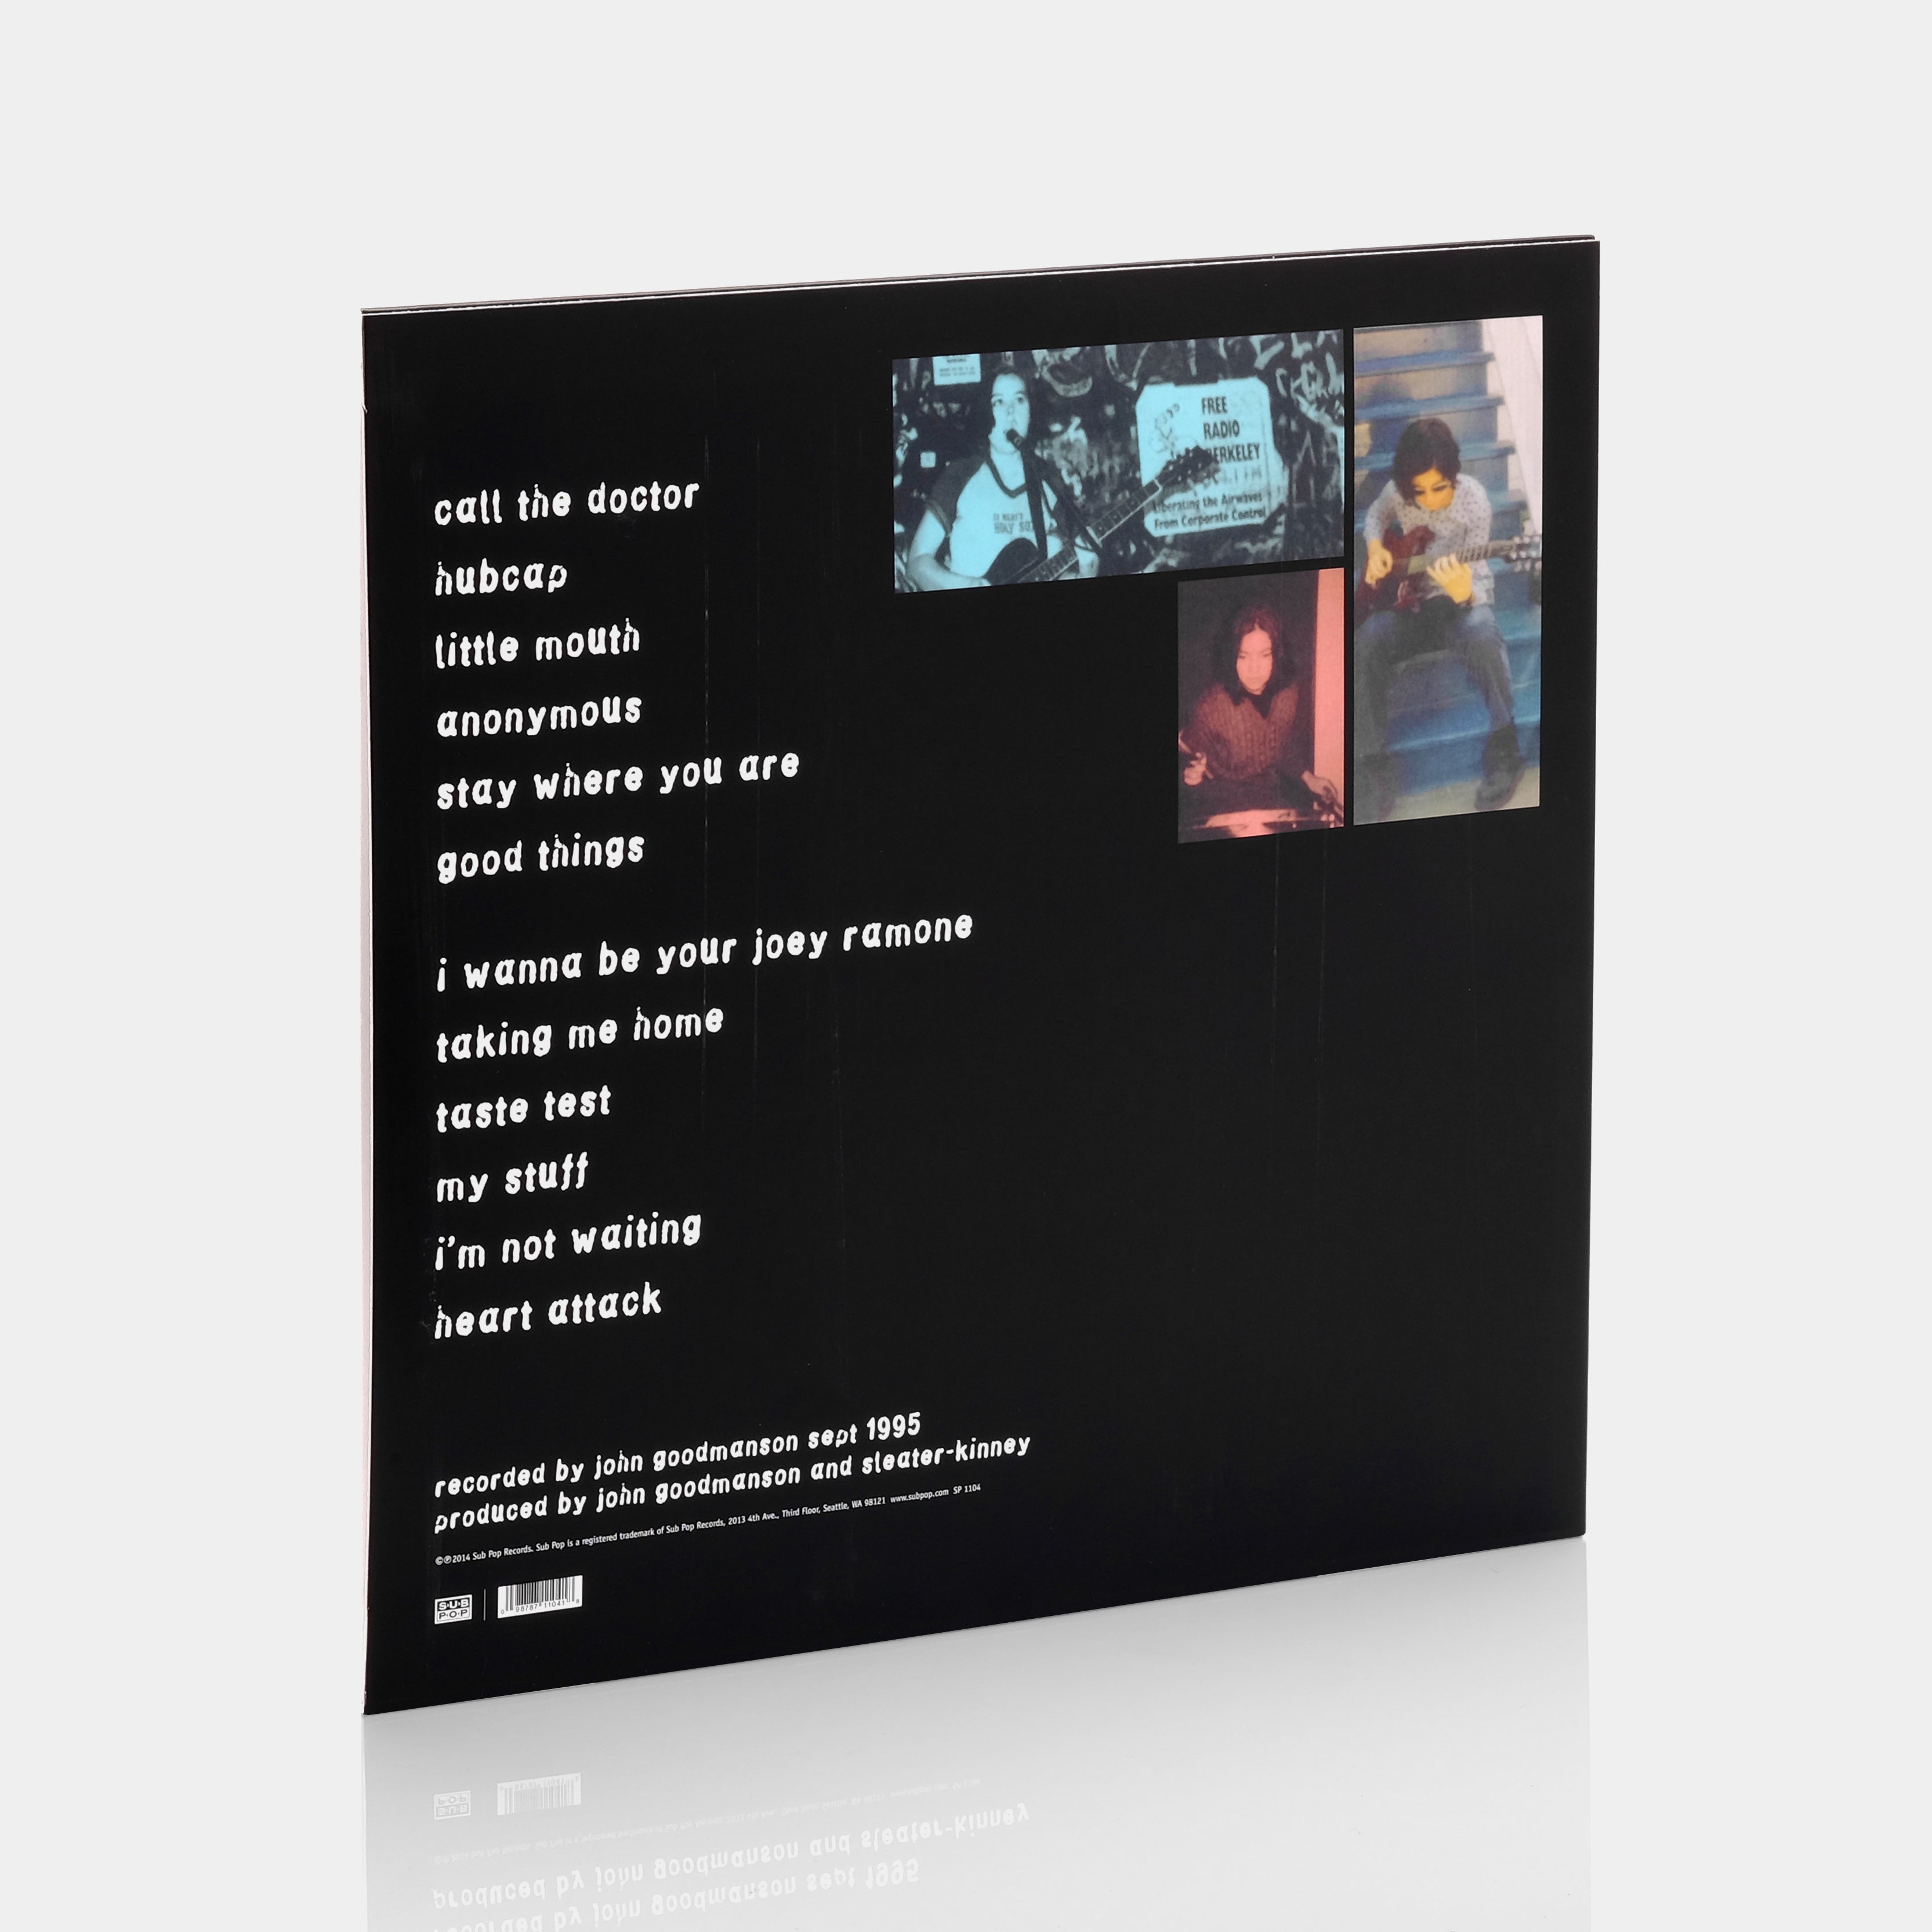 Sleater-Kinney - Call The Doctor LP Vinyl Record